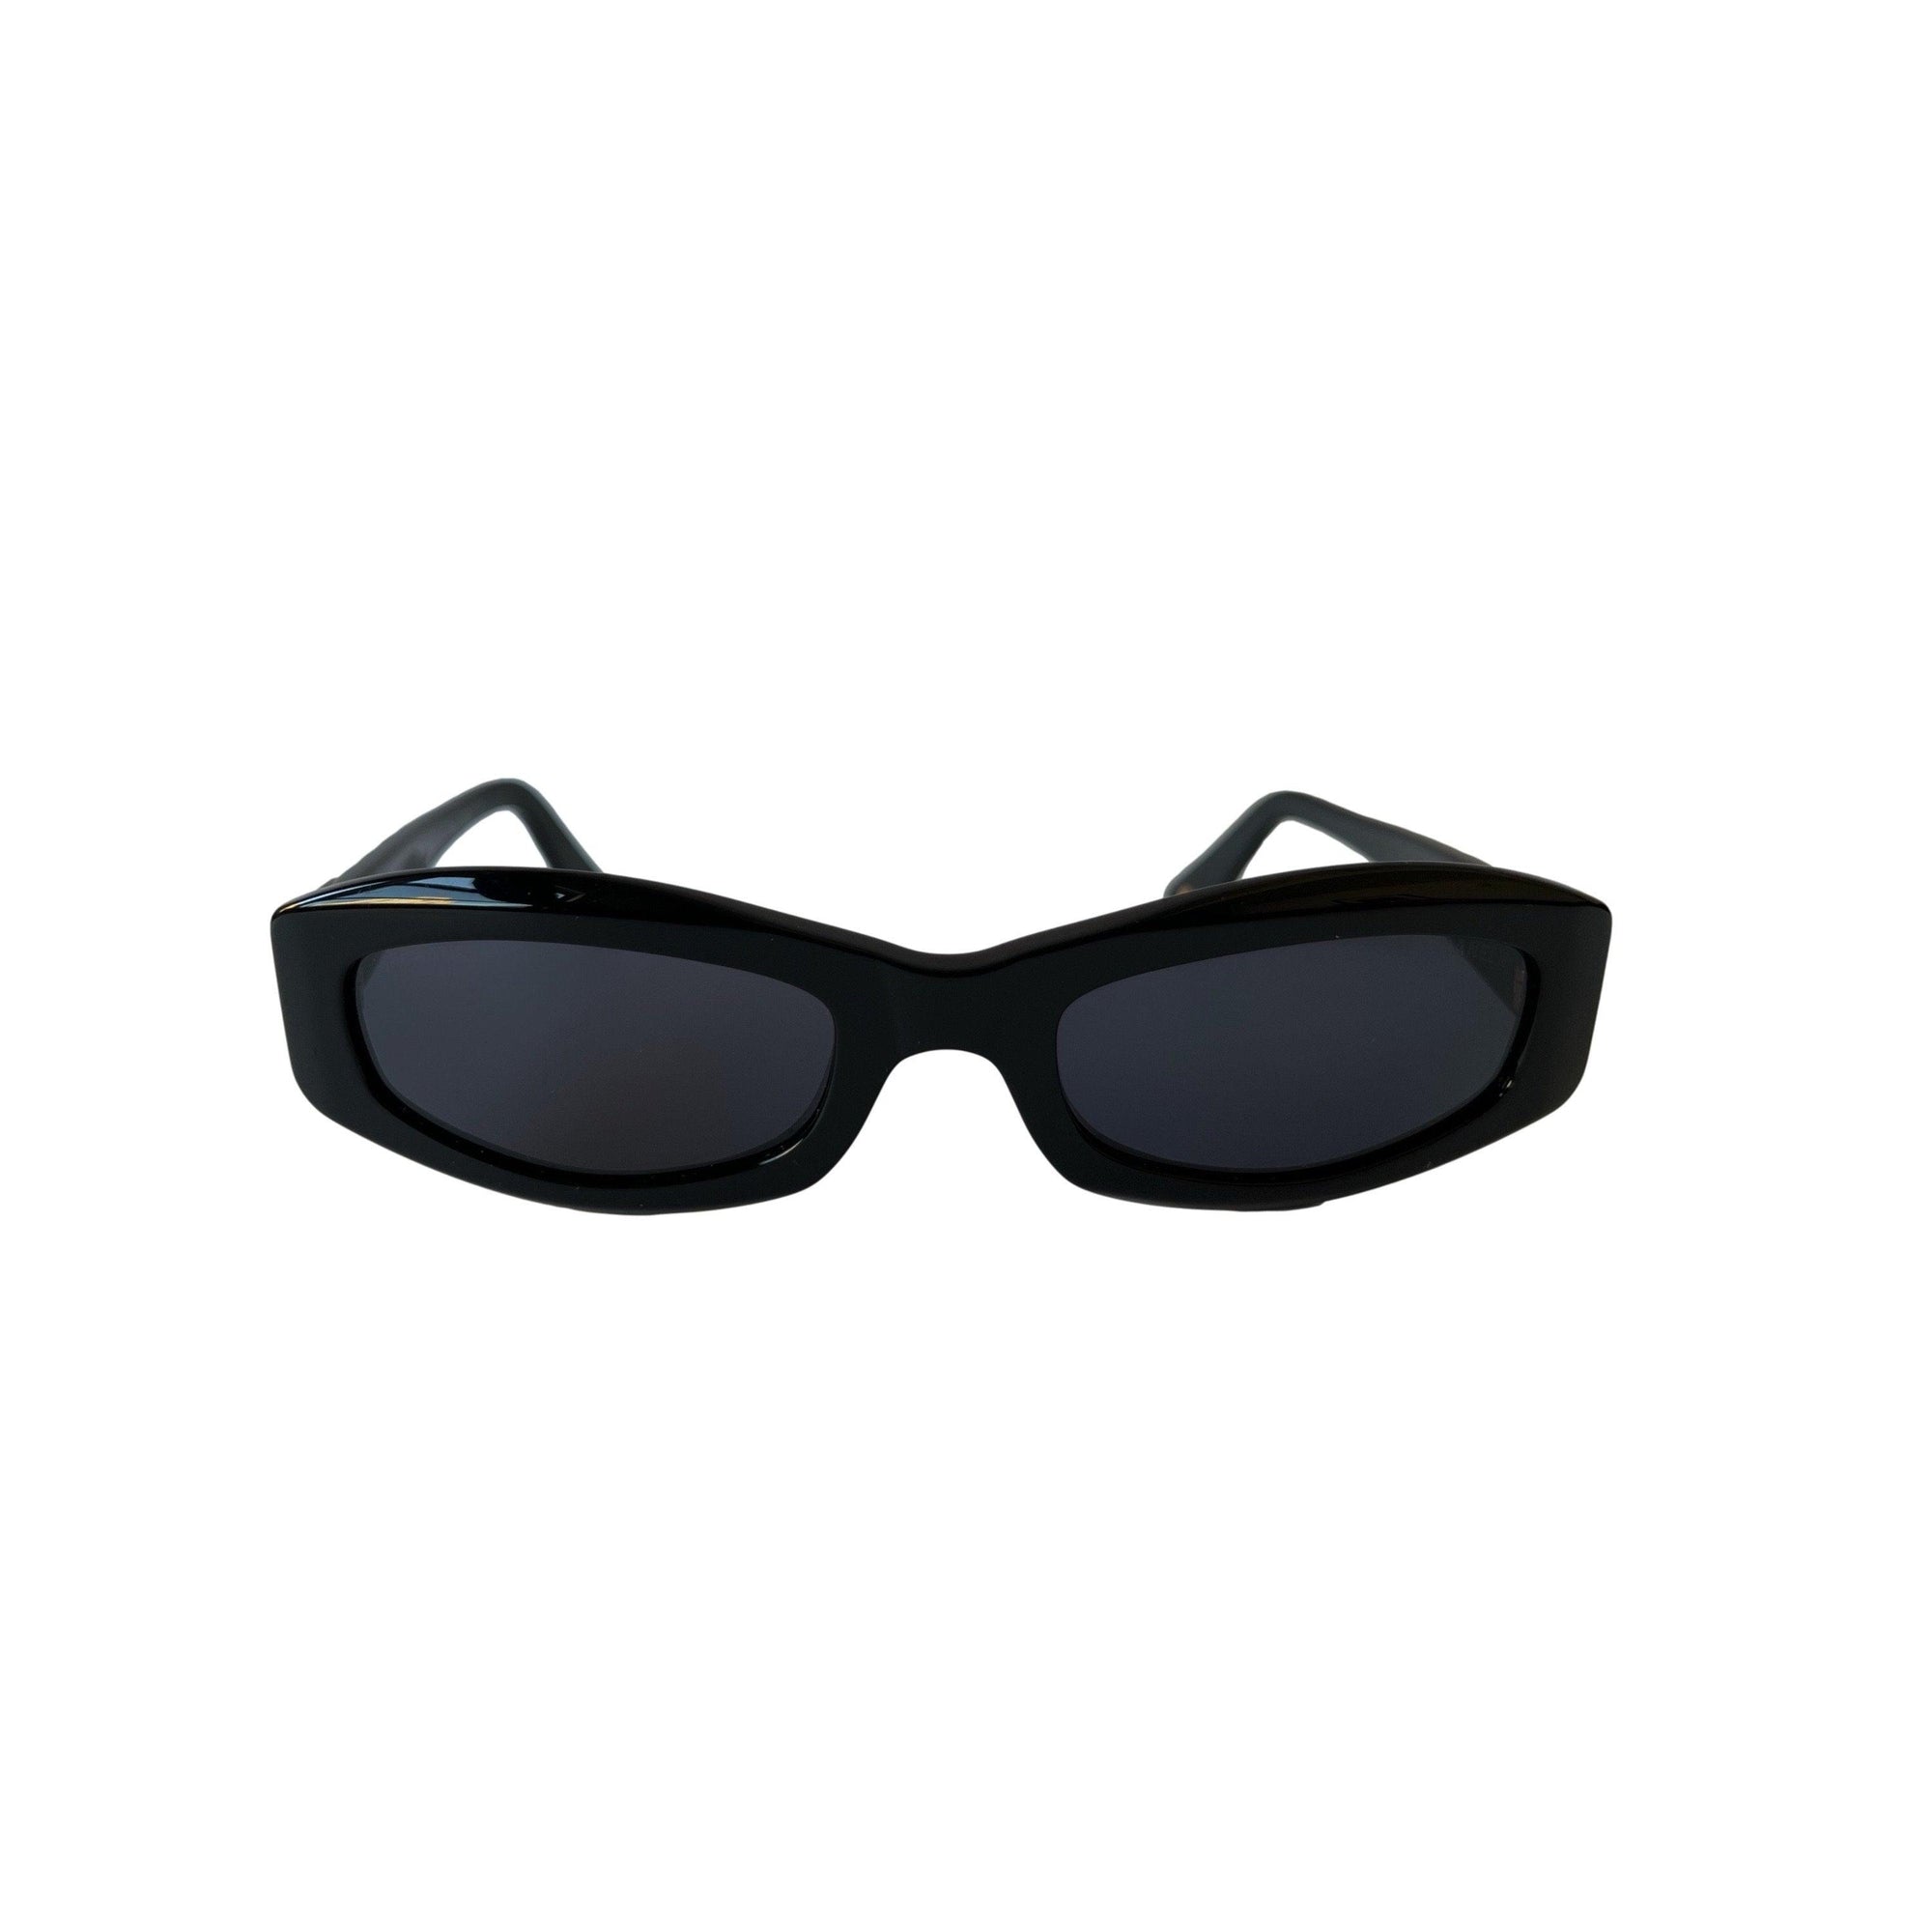 Chanel Black Sunglasses - Sunglasses